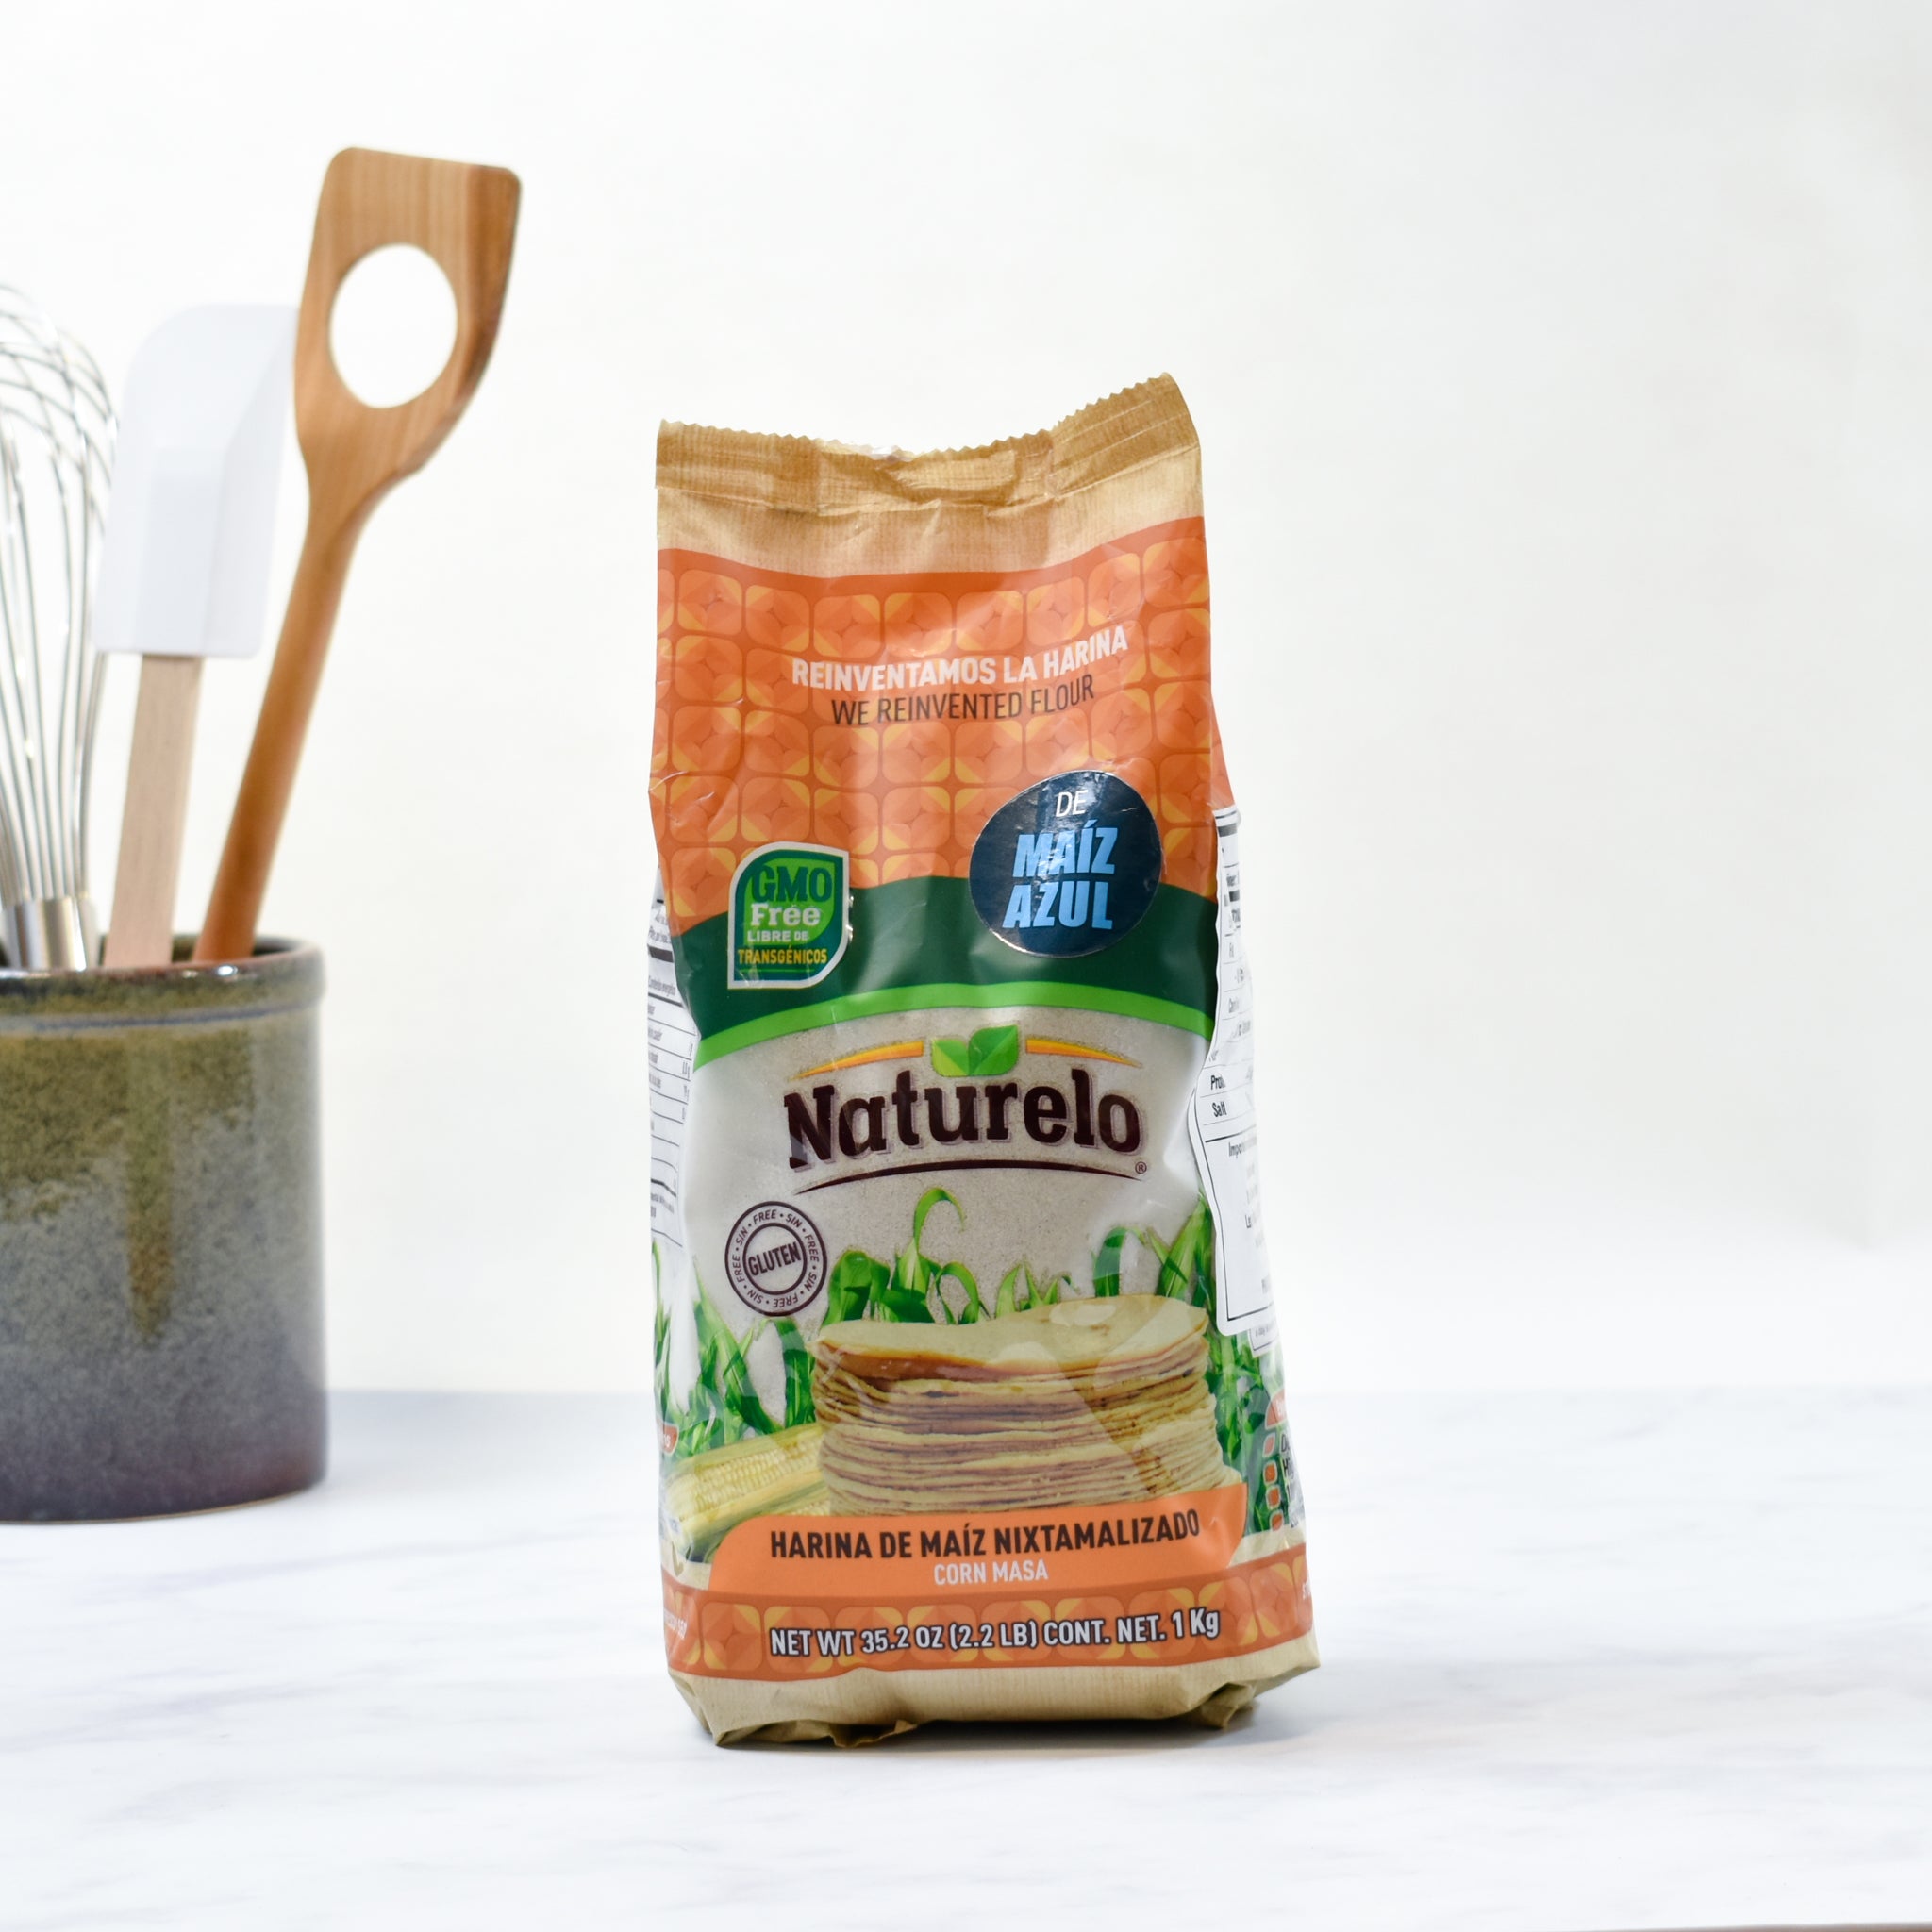 Naturelo Blue Masa Harina 1kg Ingredients Flour Grains & Seeds lifestyle packaging photo